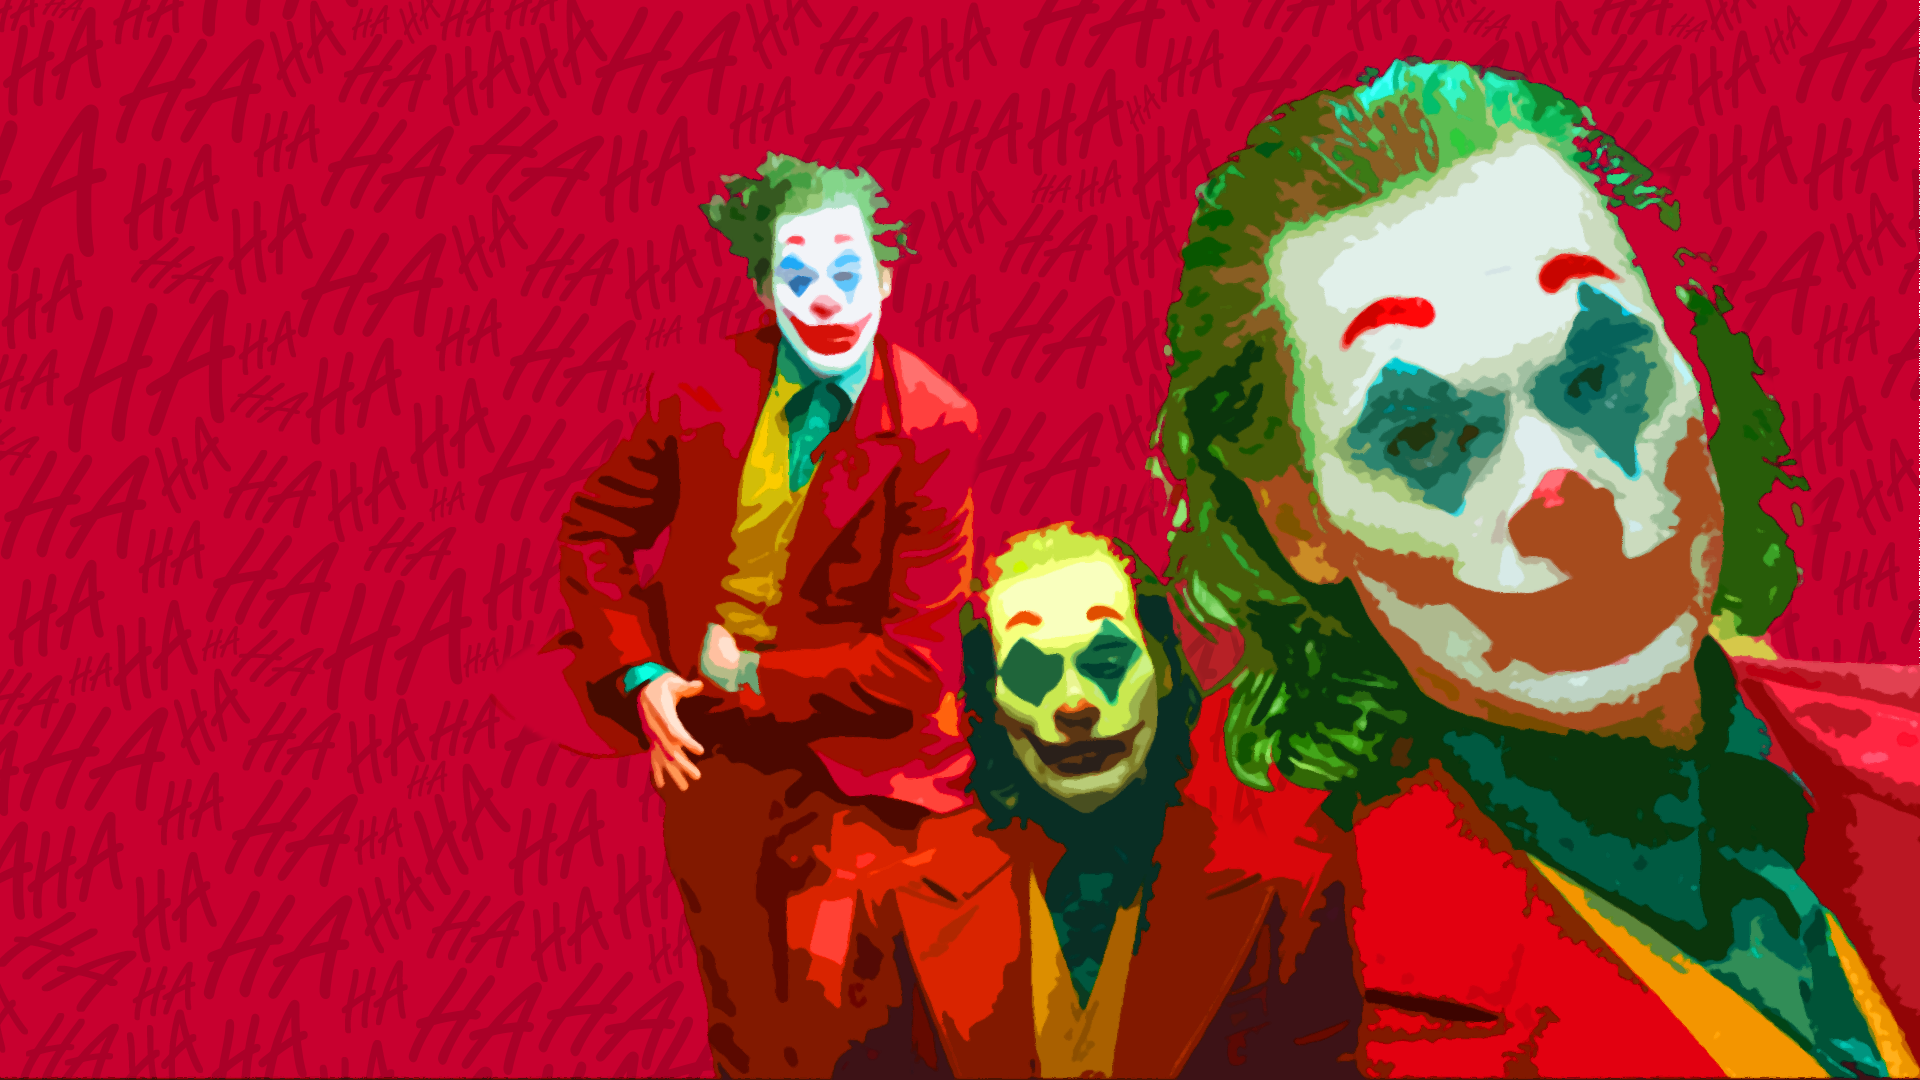 Joker (2019) Wallpaper 1920x1080 | XeuX21 by XeuX21 on DeviantArt